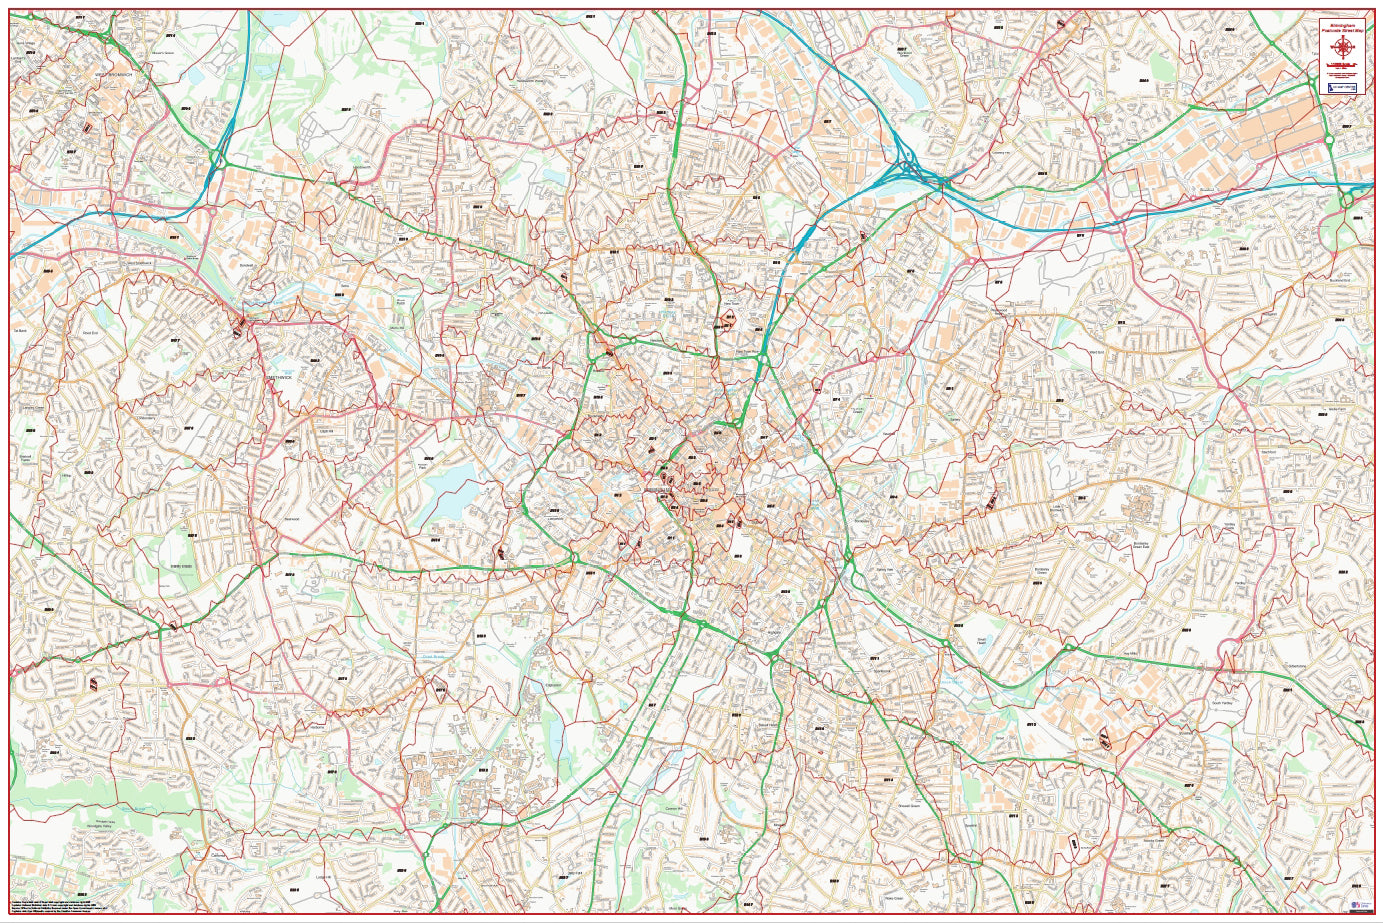 Central Birmingham Postcode City Street Map - Digital Download